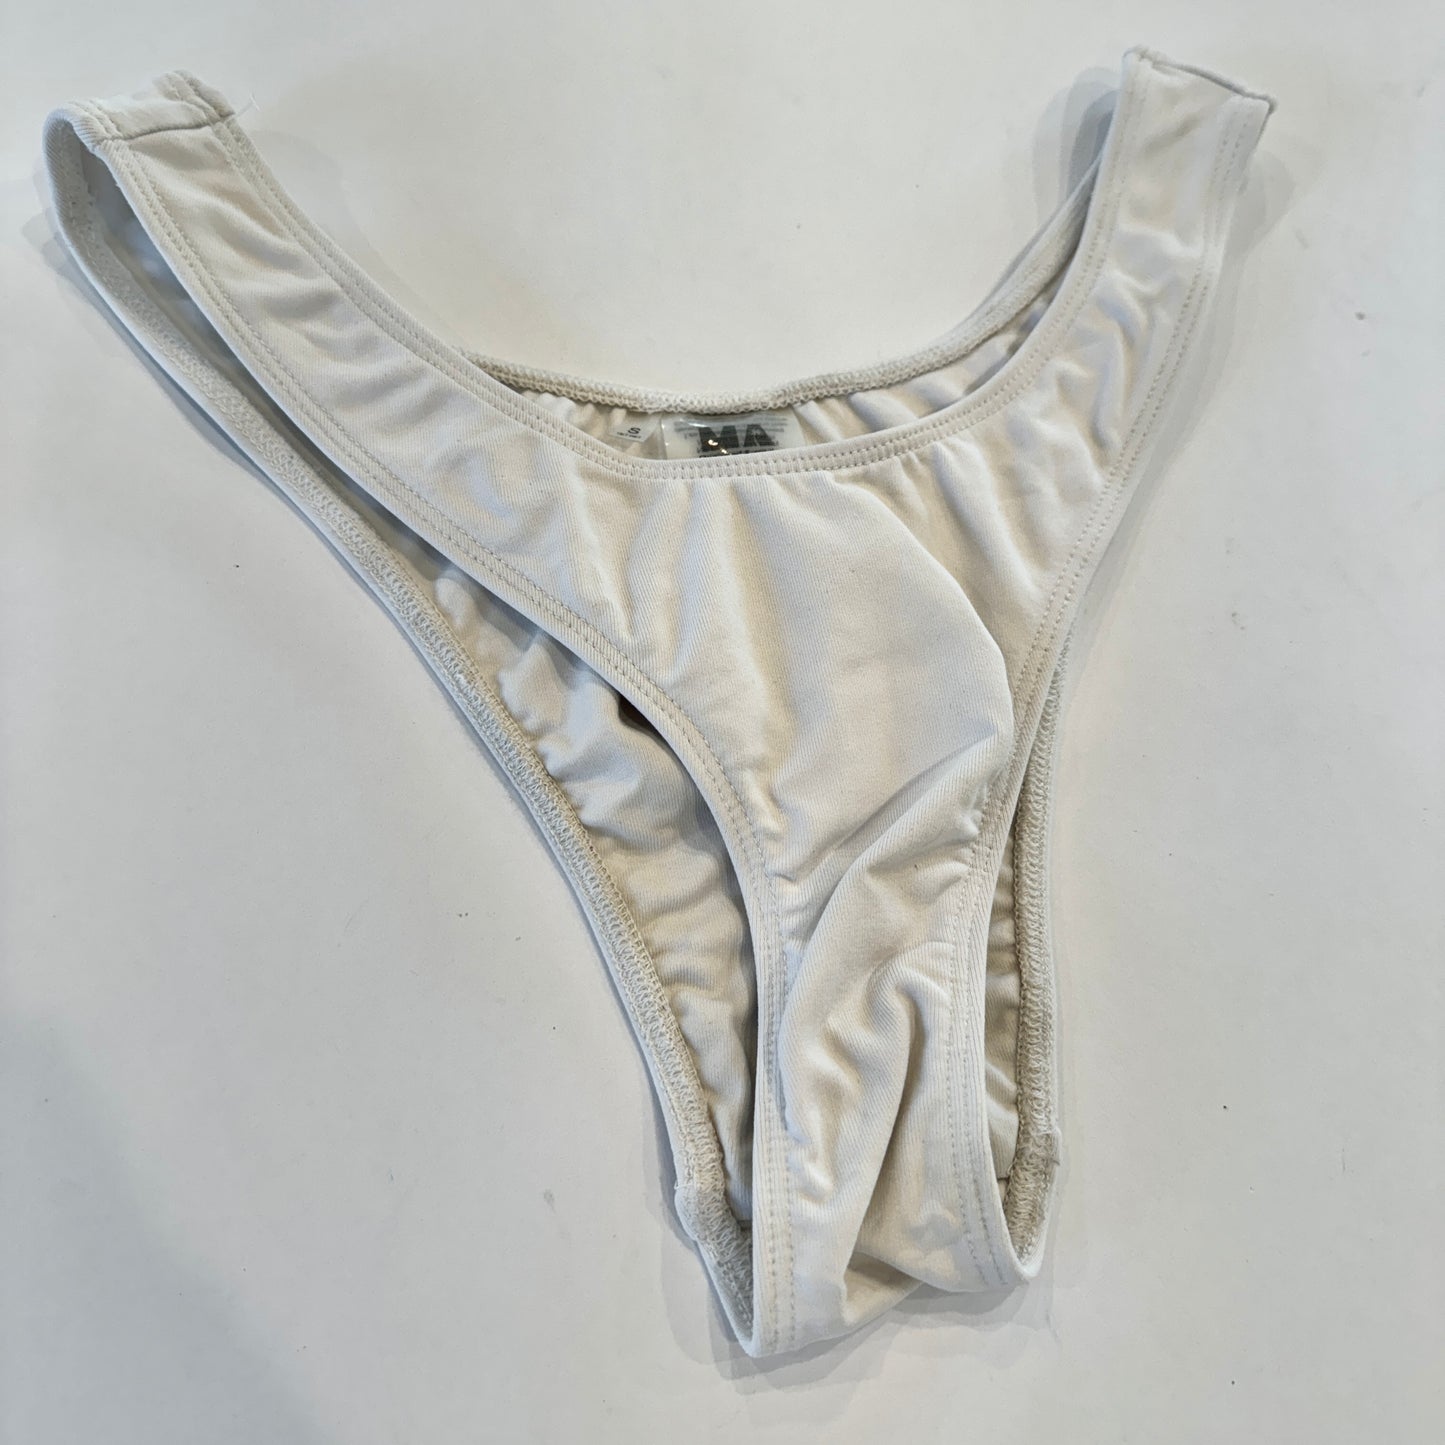 Minimale Animale Wall Street bikini brief swim bottom in sea salt white - Pre-Owned Worn Once